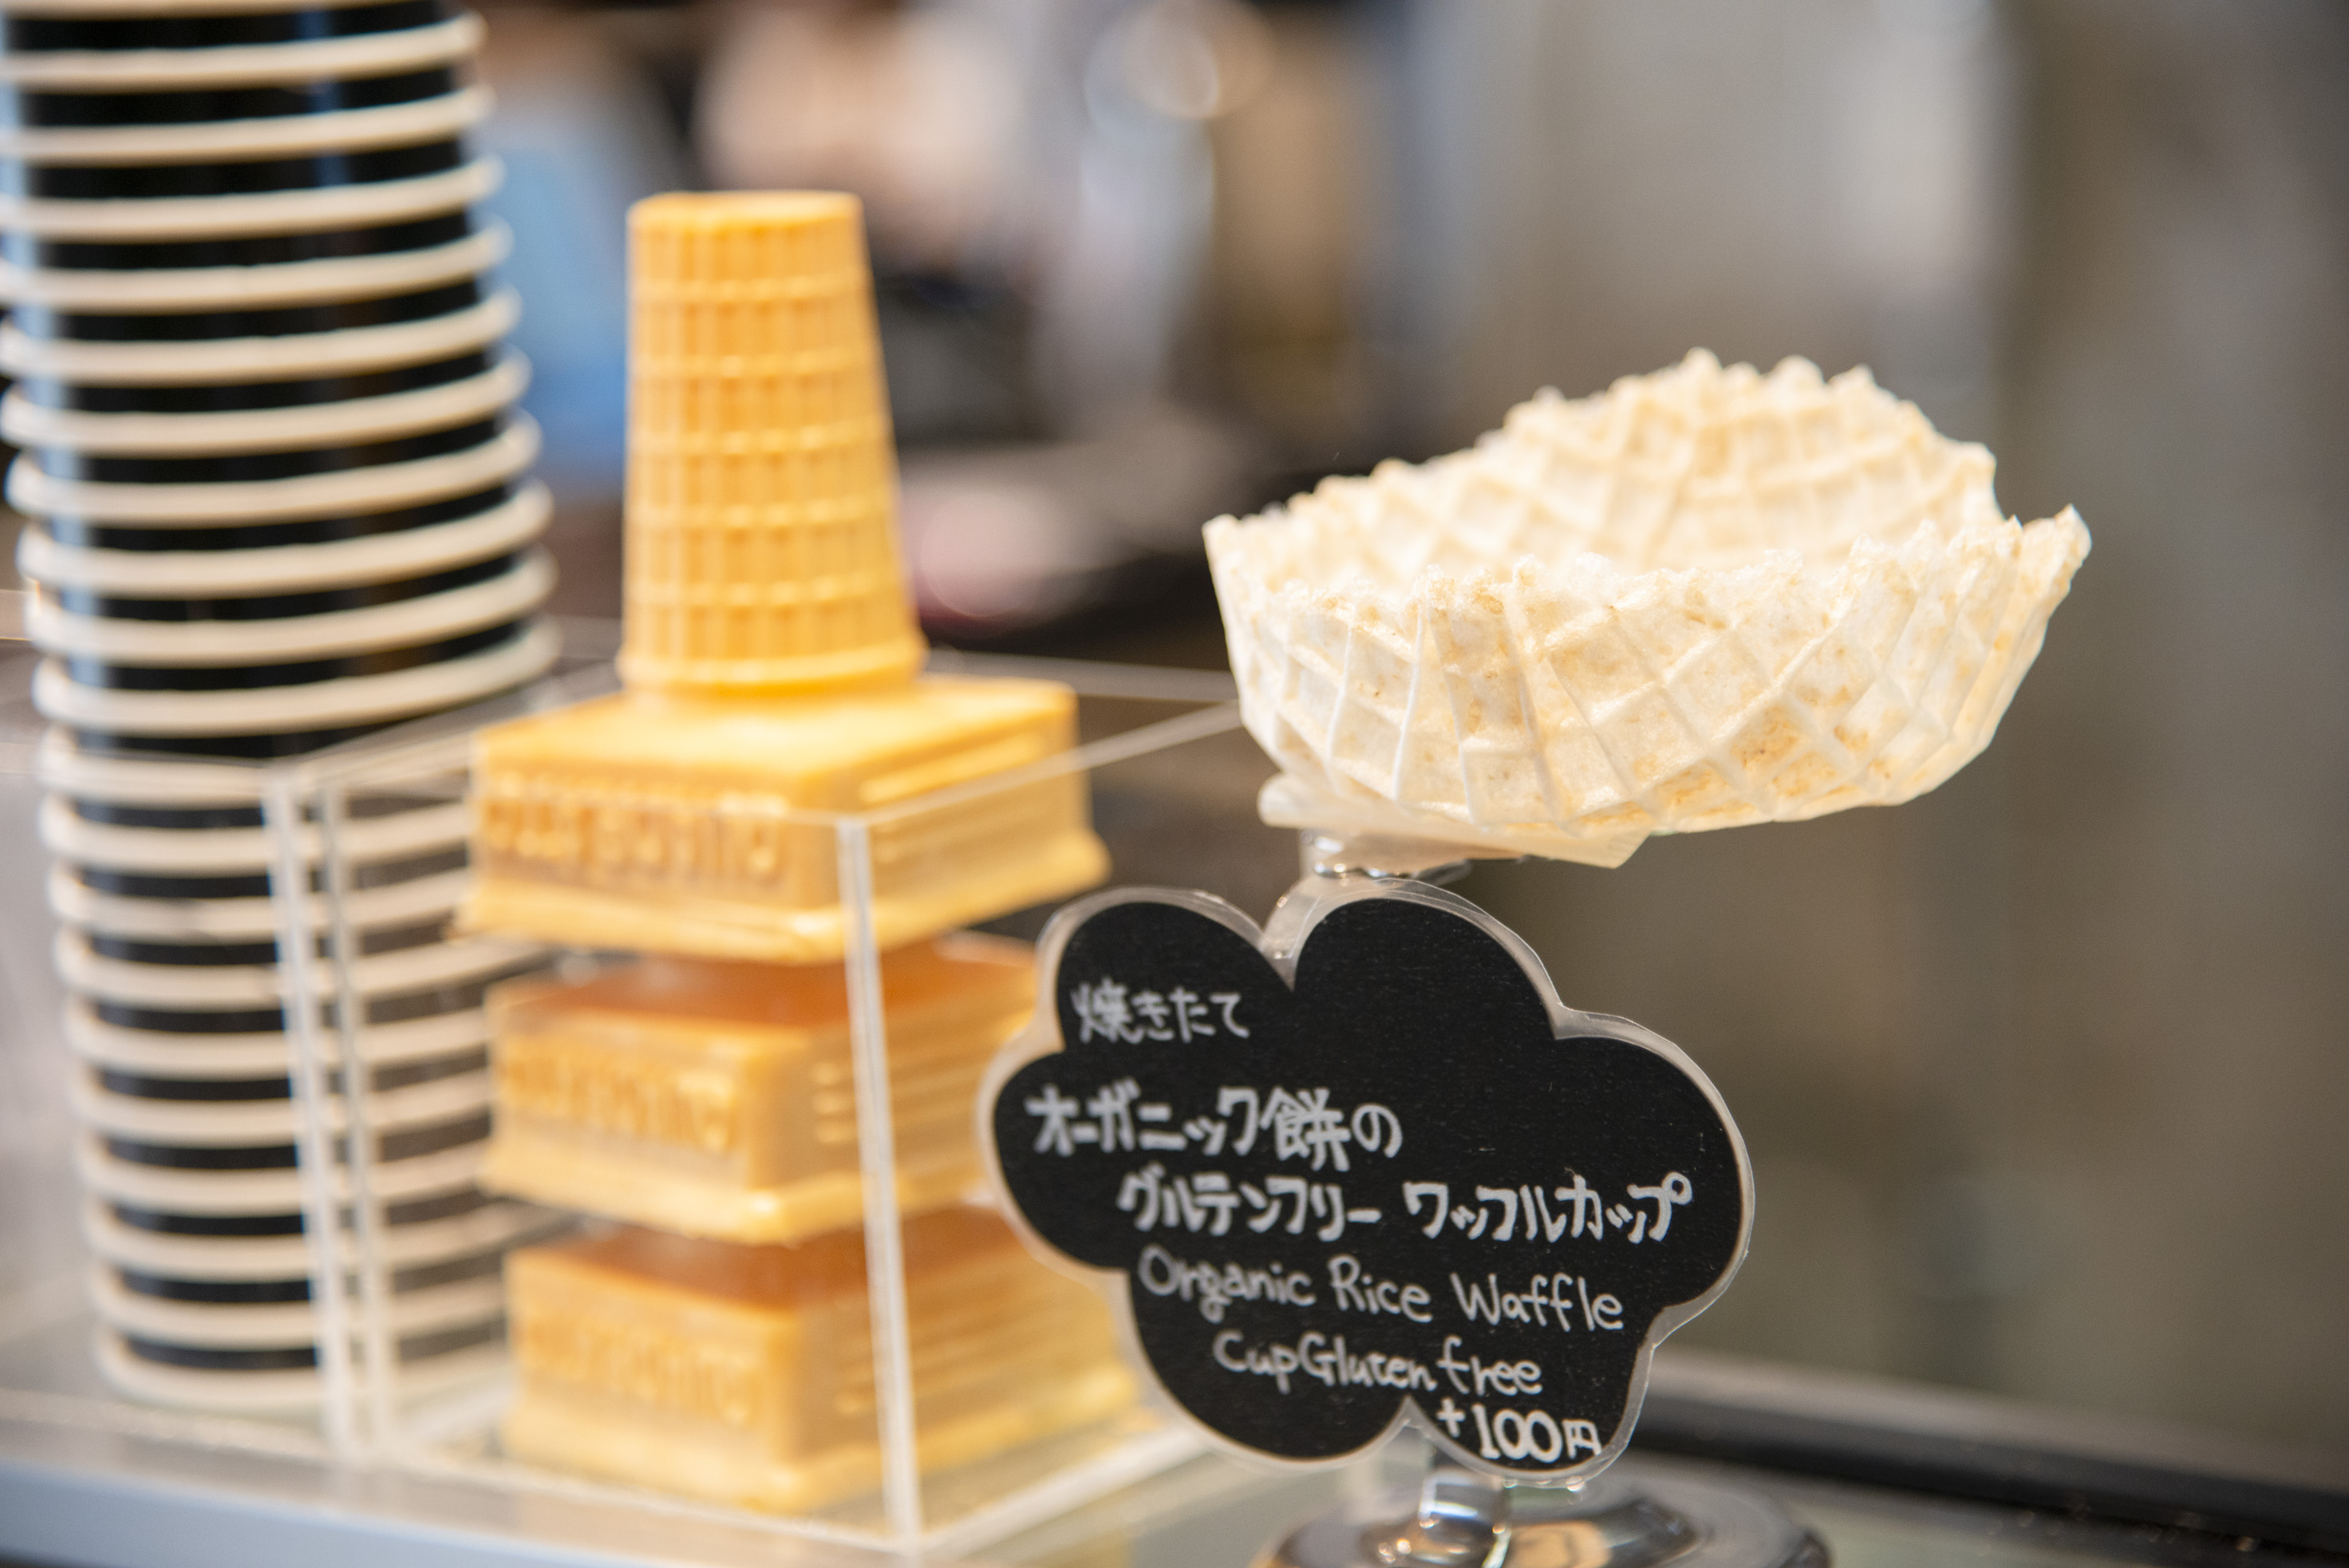 Premarche Gelateria Tokyo-A gluten-free waffle made of organic mochi